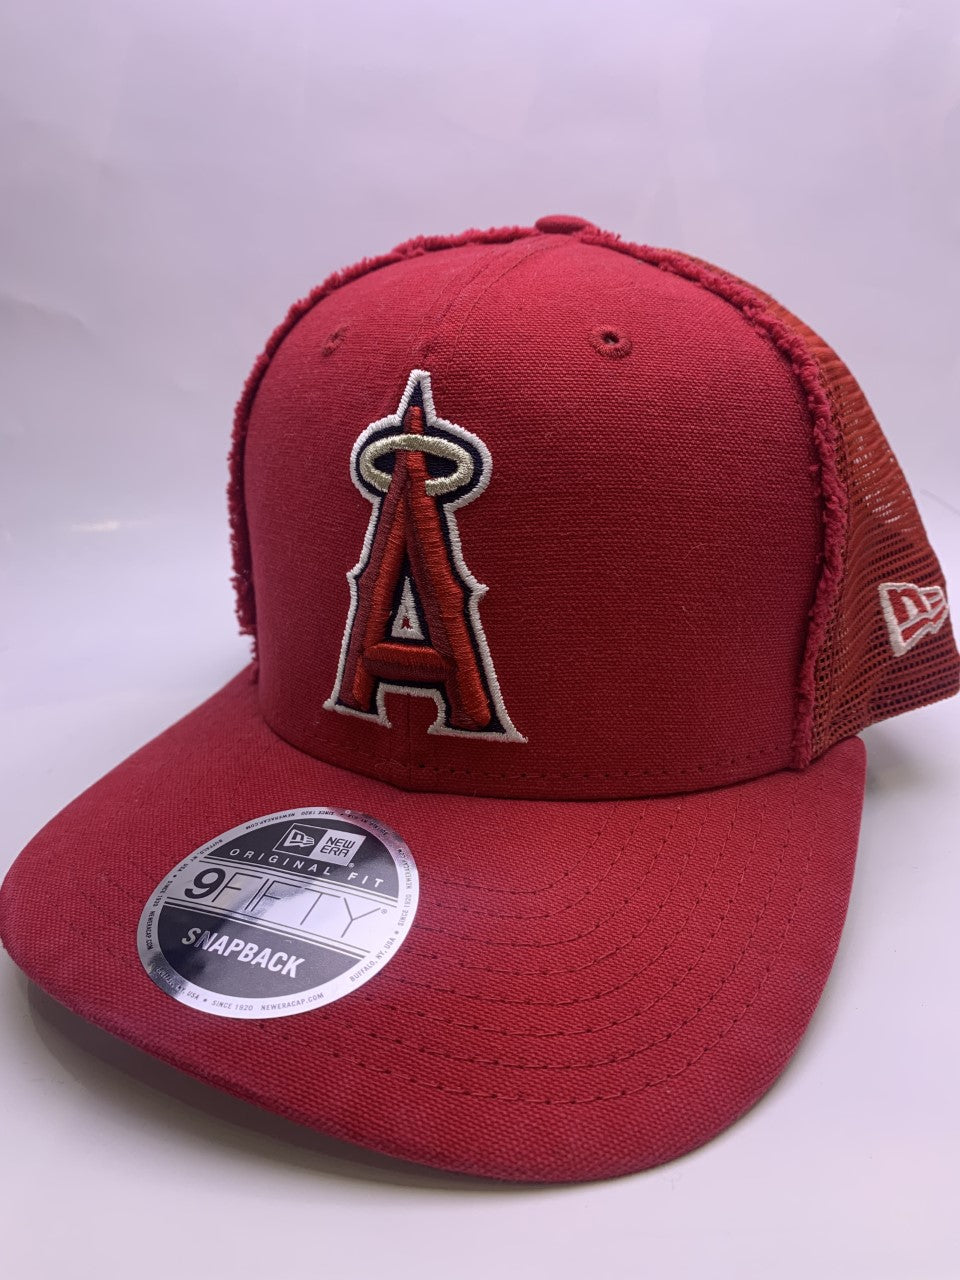 LOS ANGELES ANGELS NEW ERA 9FIFTY SNAPBACK HAT